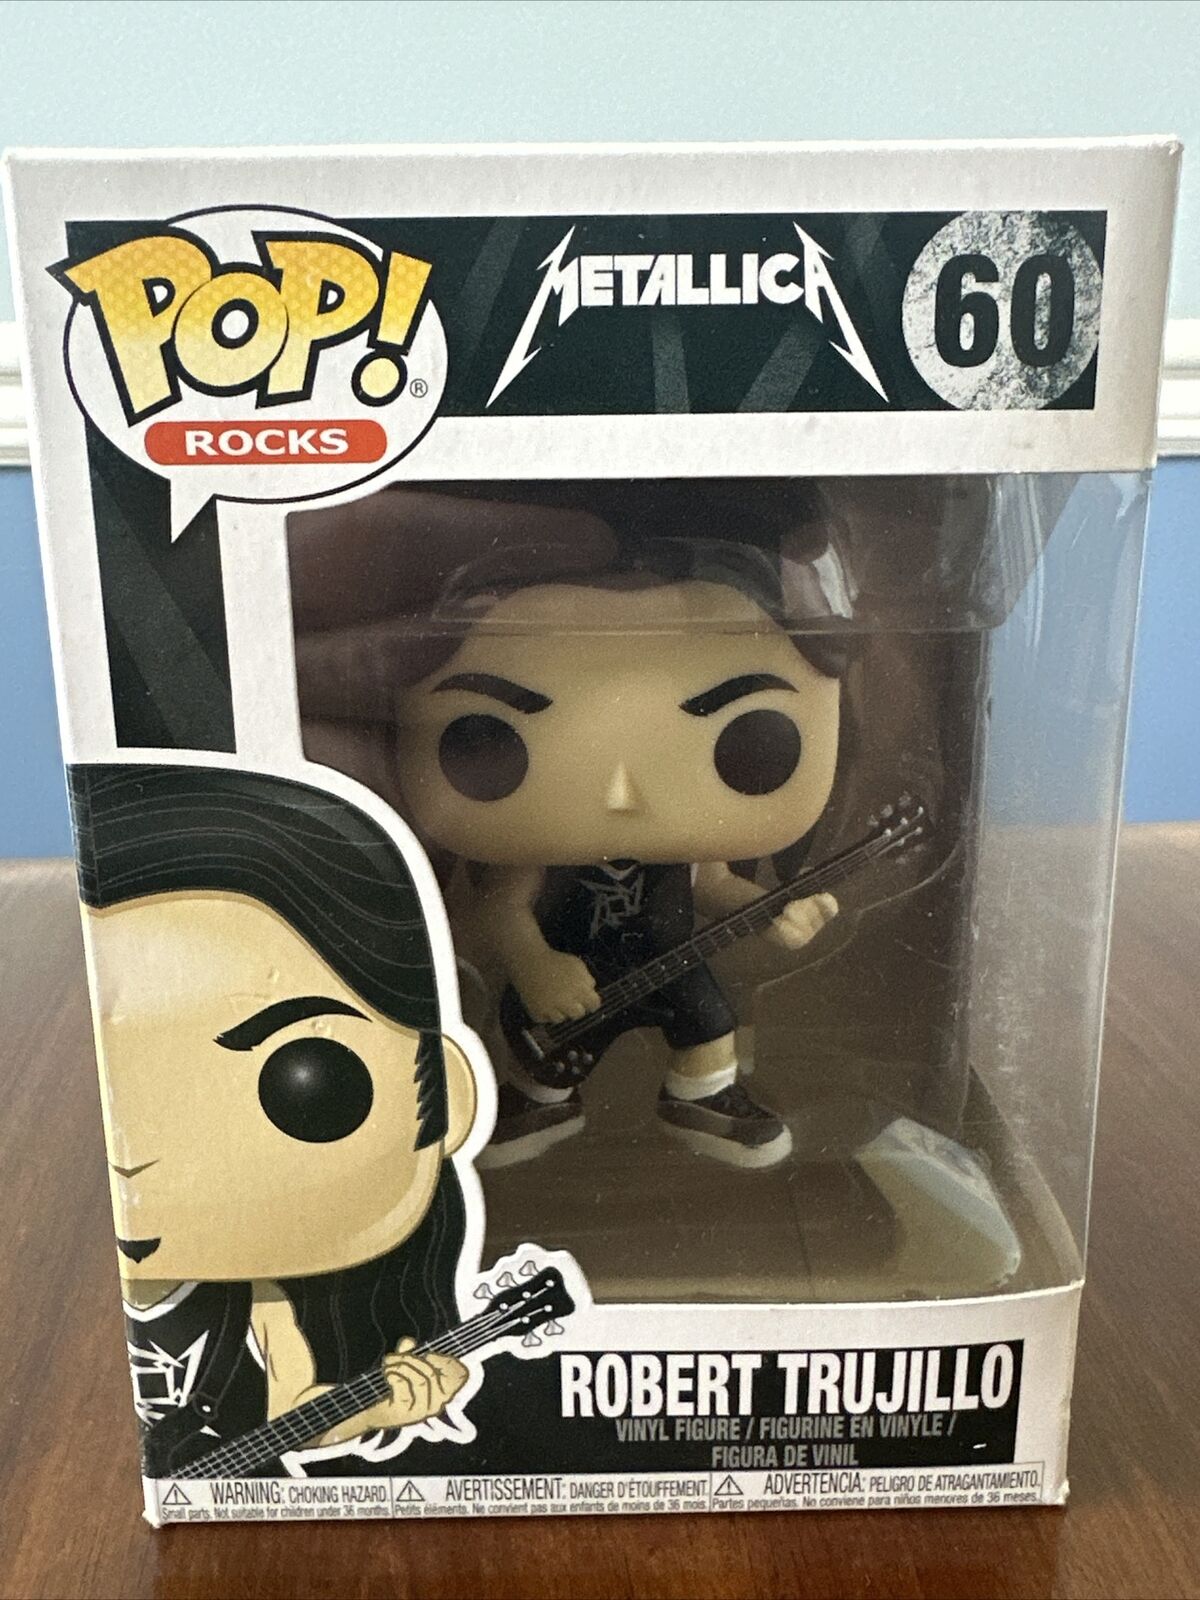 Metallica Funko POP Rocks Robert Trujillo Vinyl Figure #60